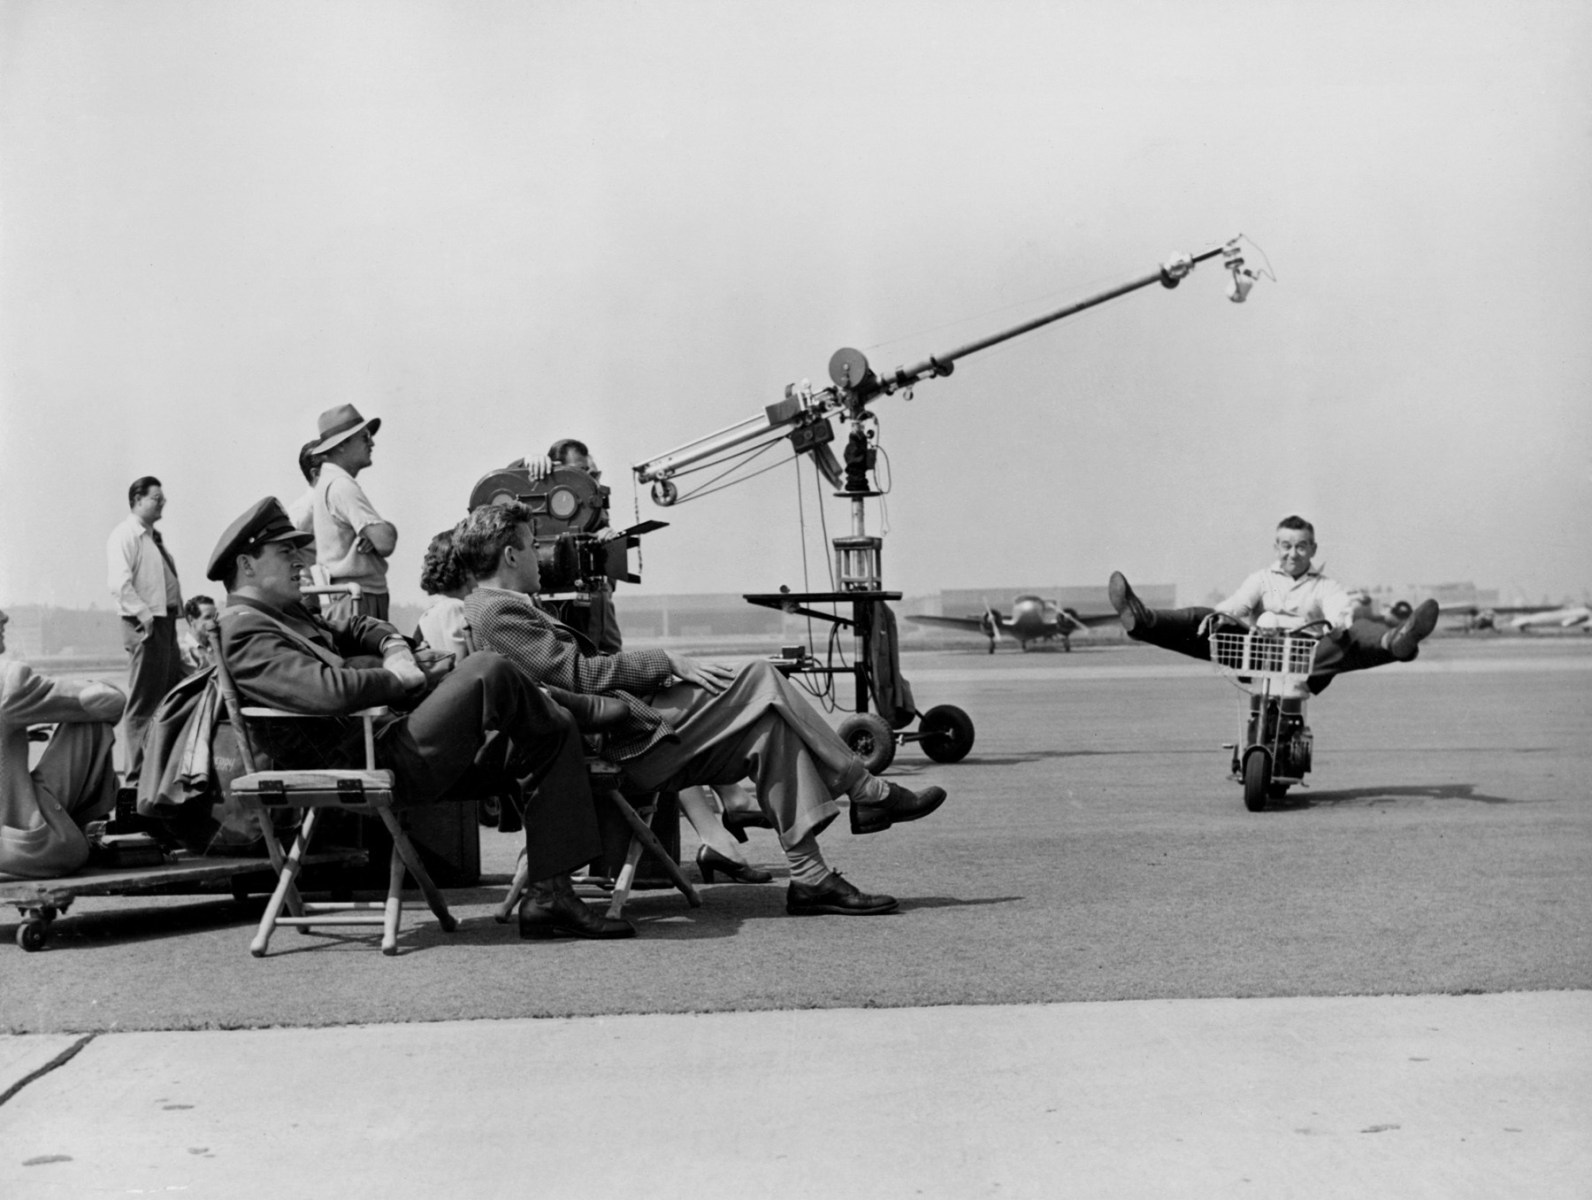 William Wyler on a Bike Behind the Scenes